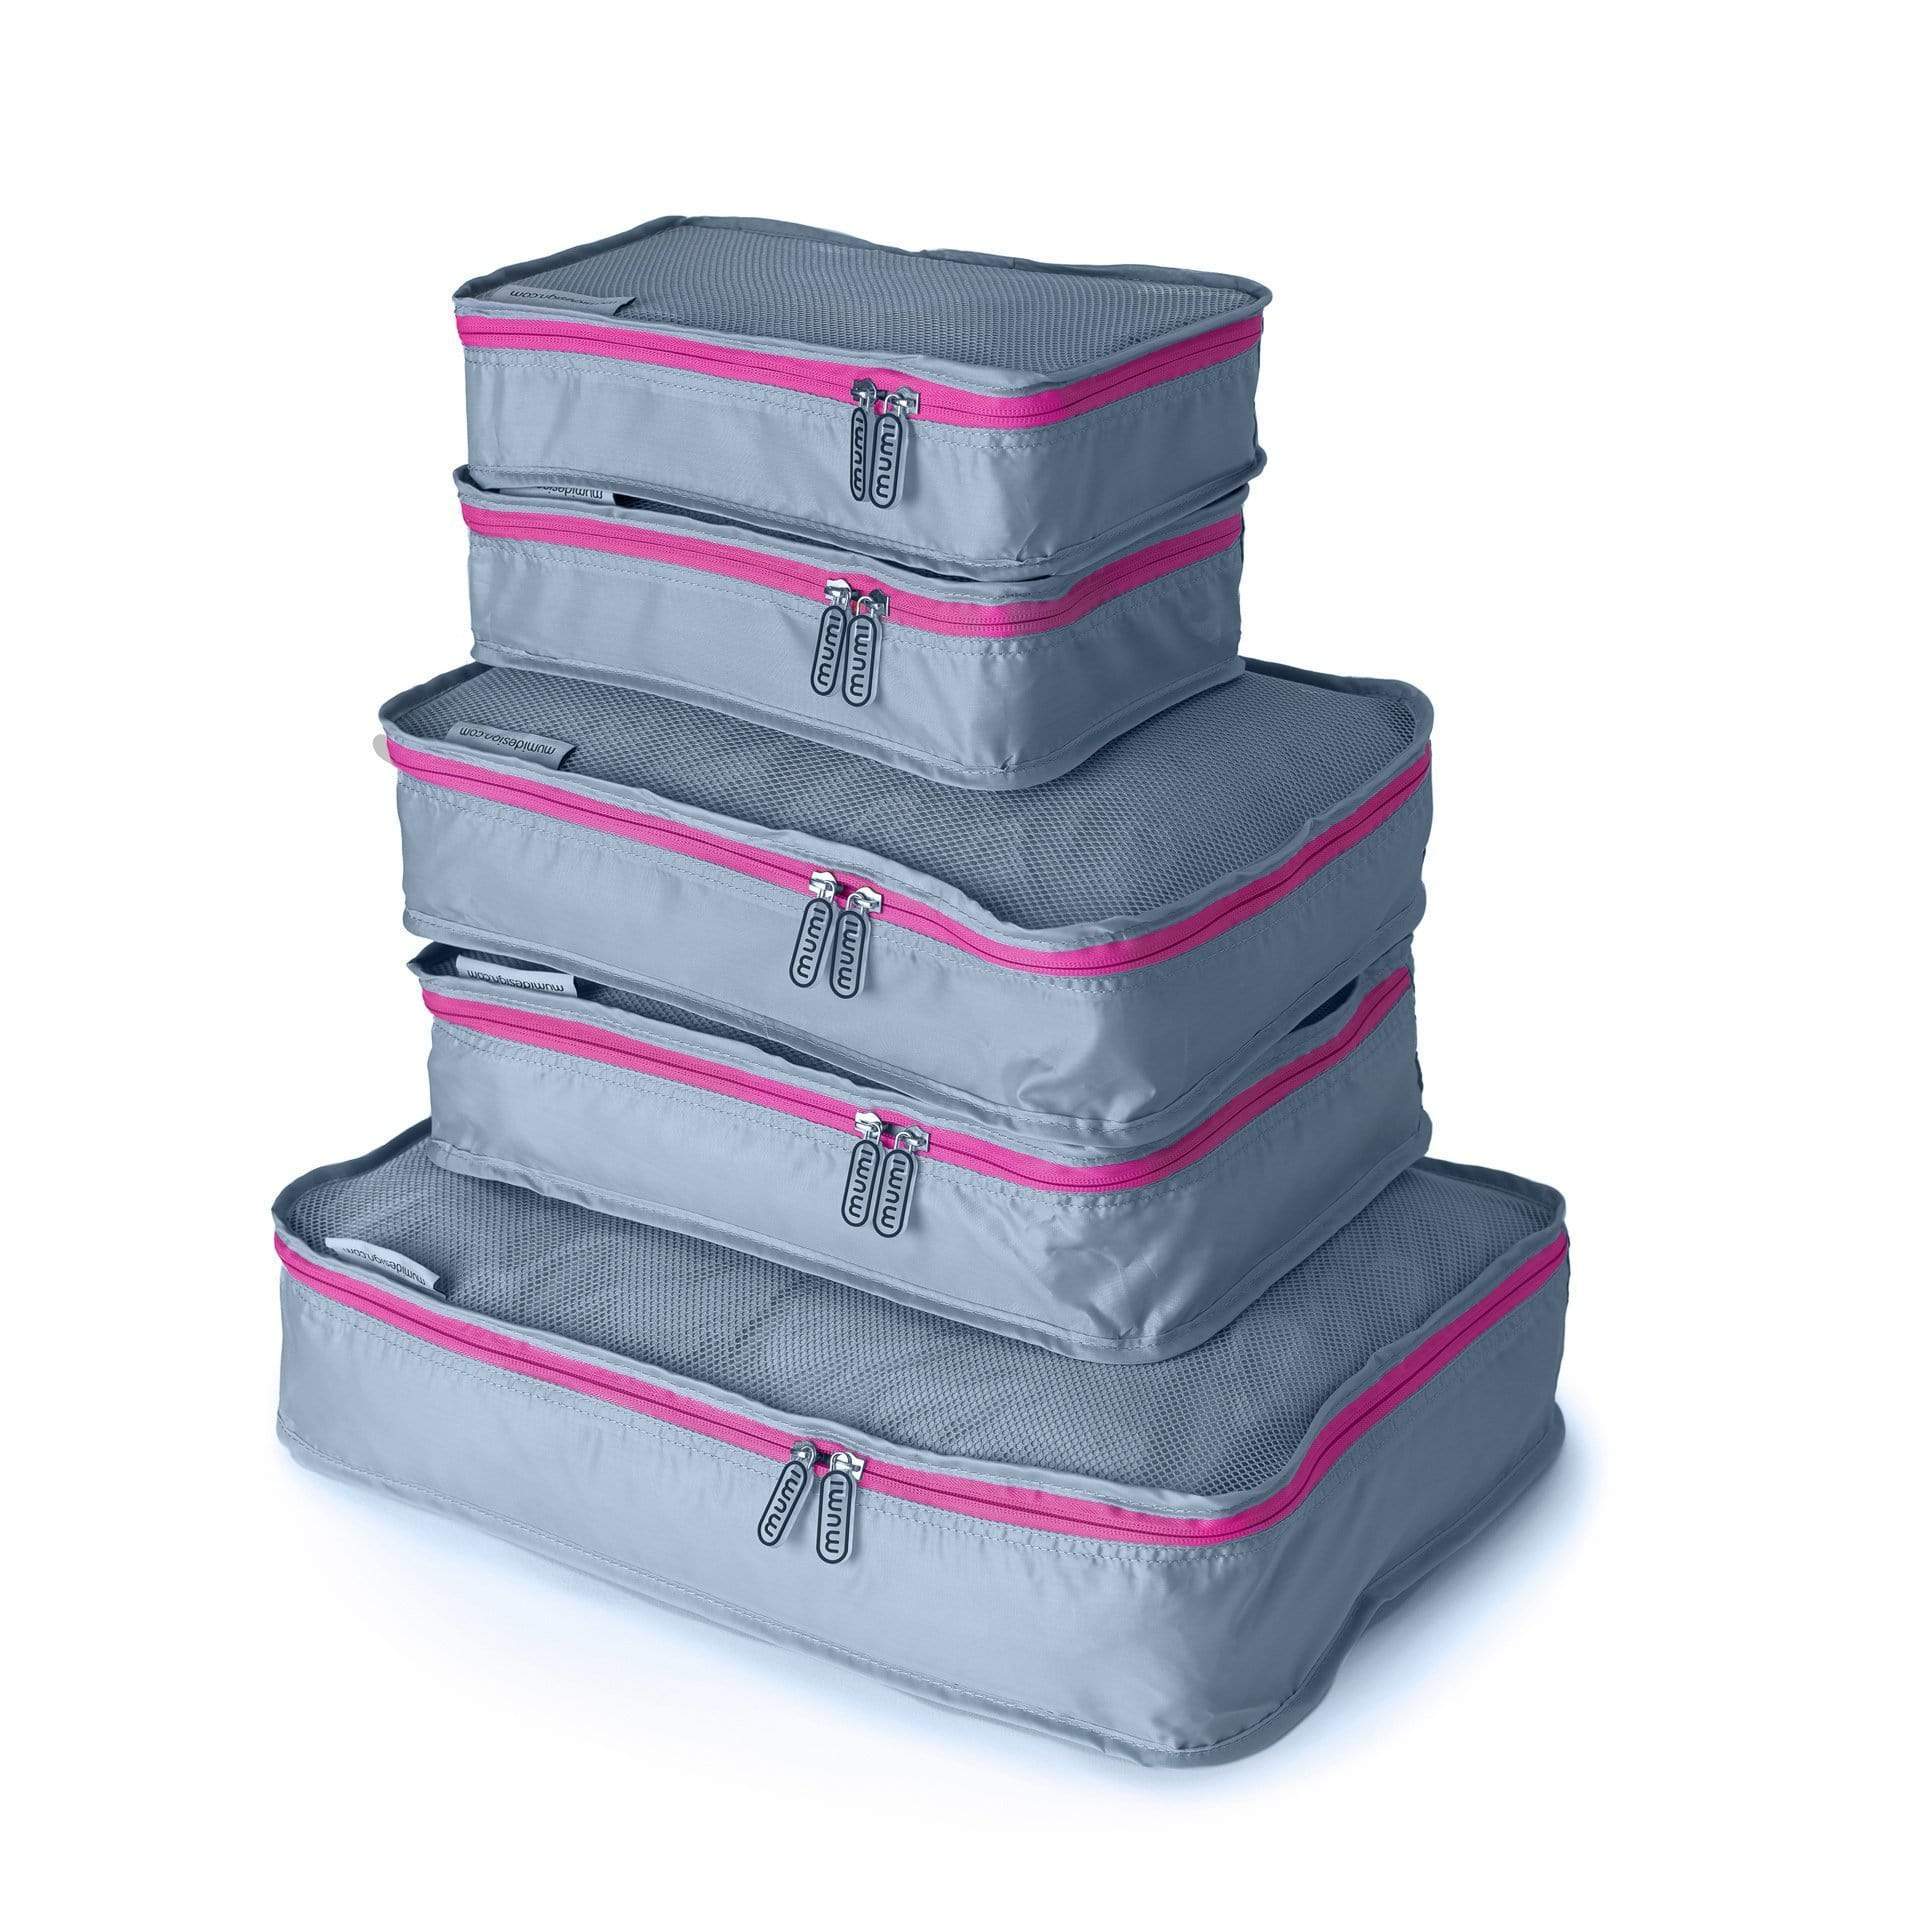 mumi PACKING CUBES pink packing cubes (set of 5)